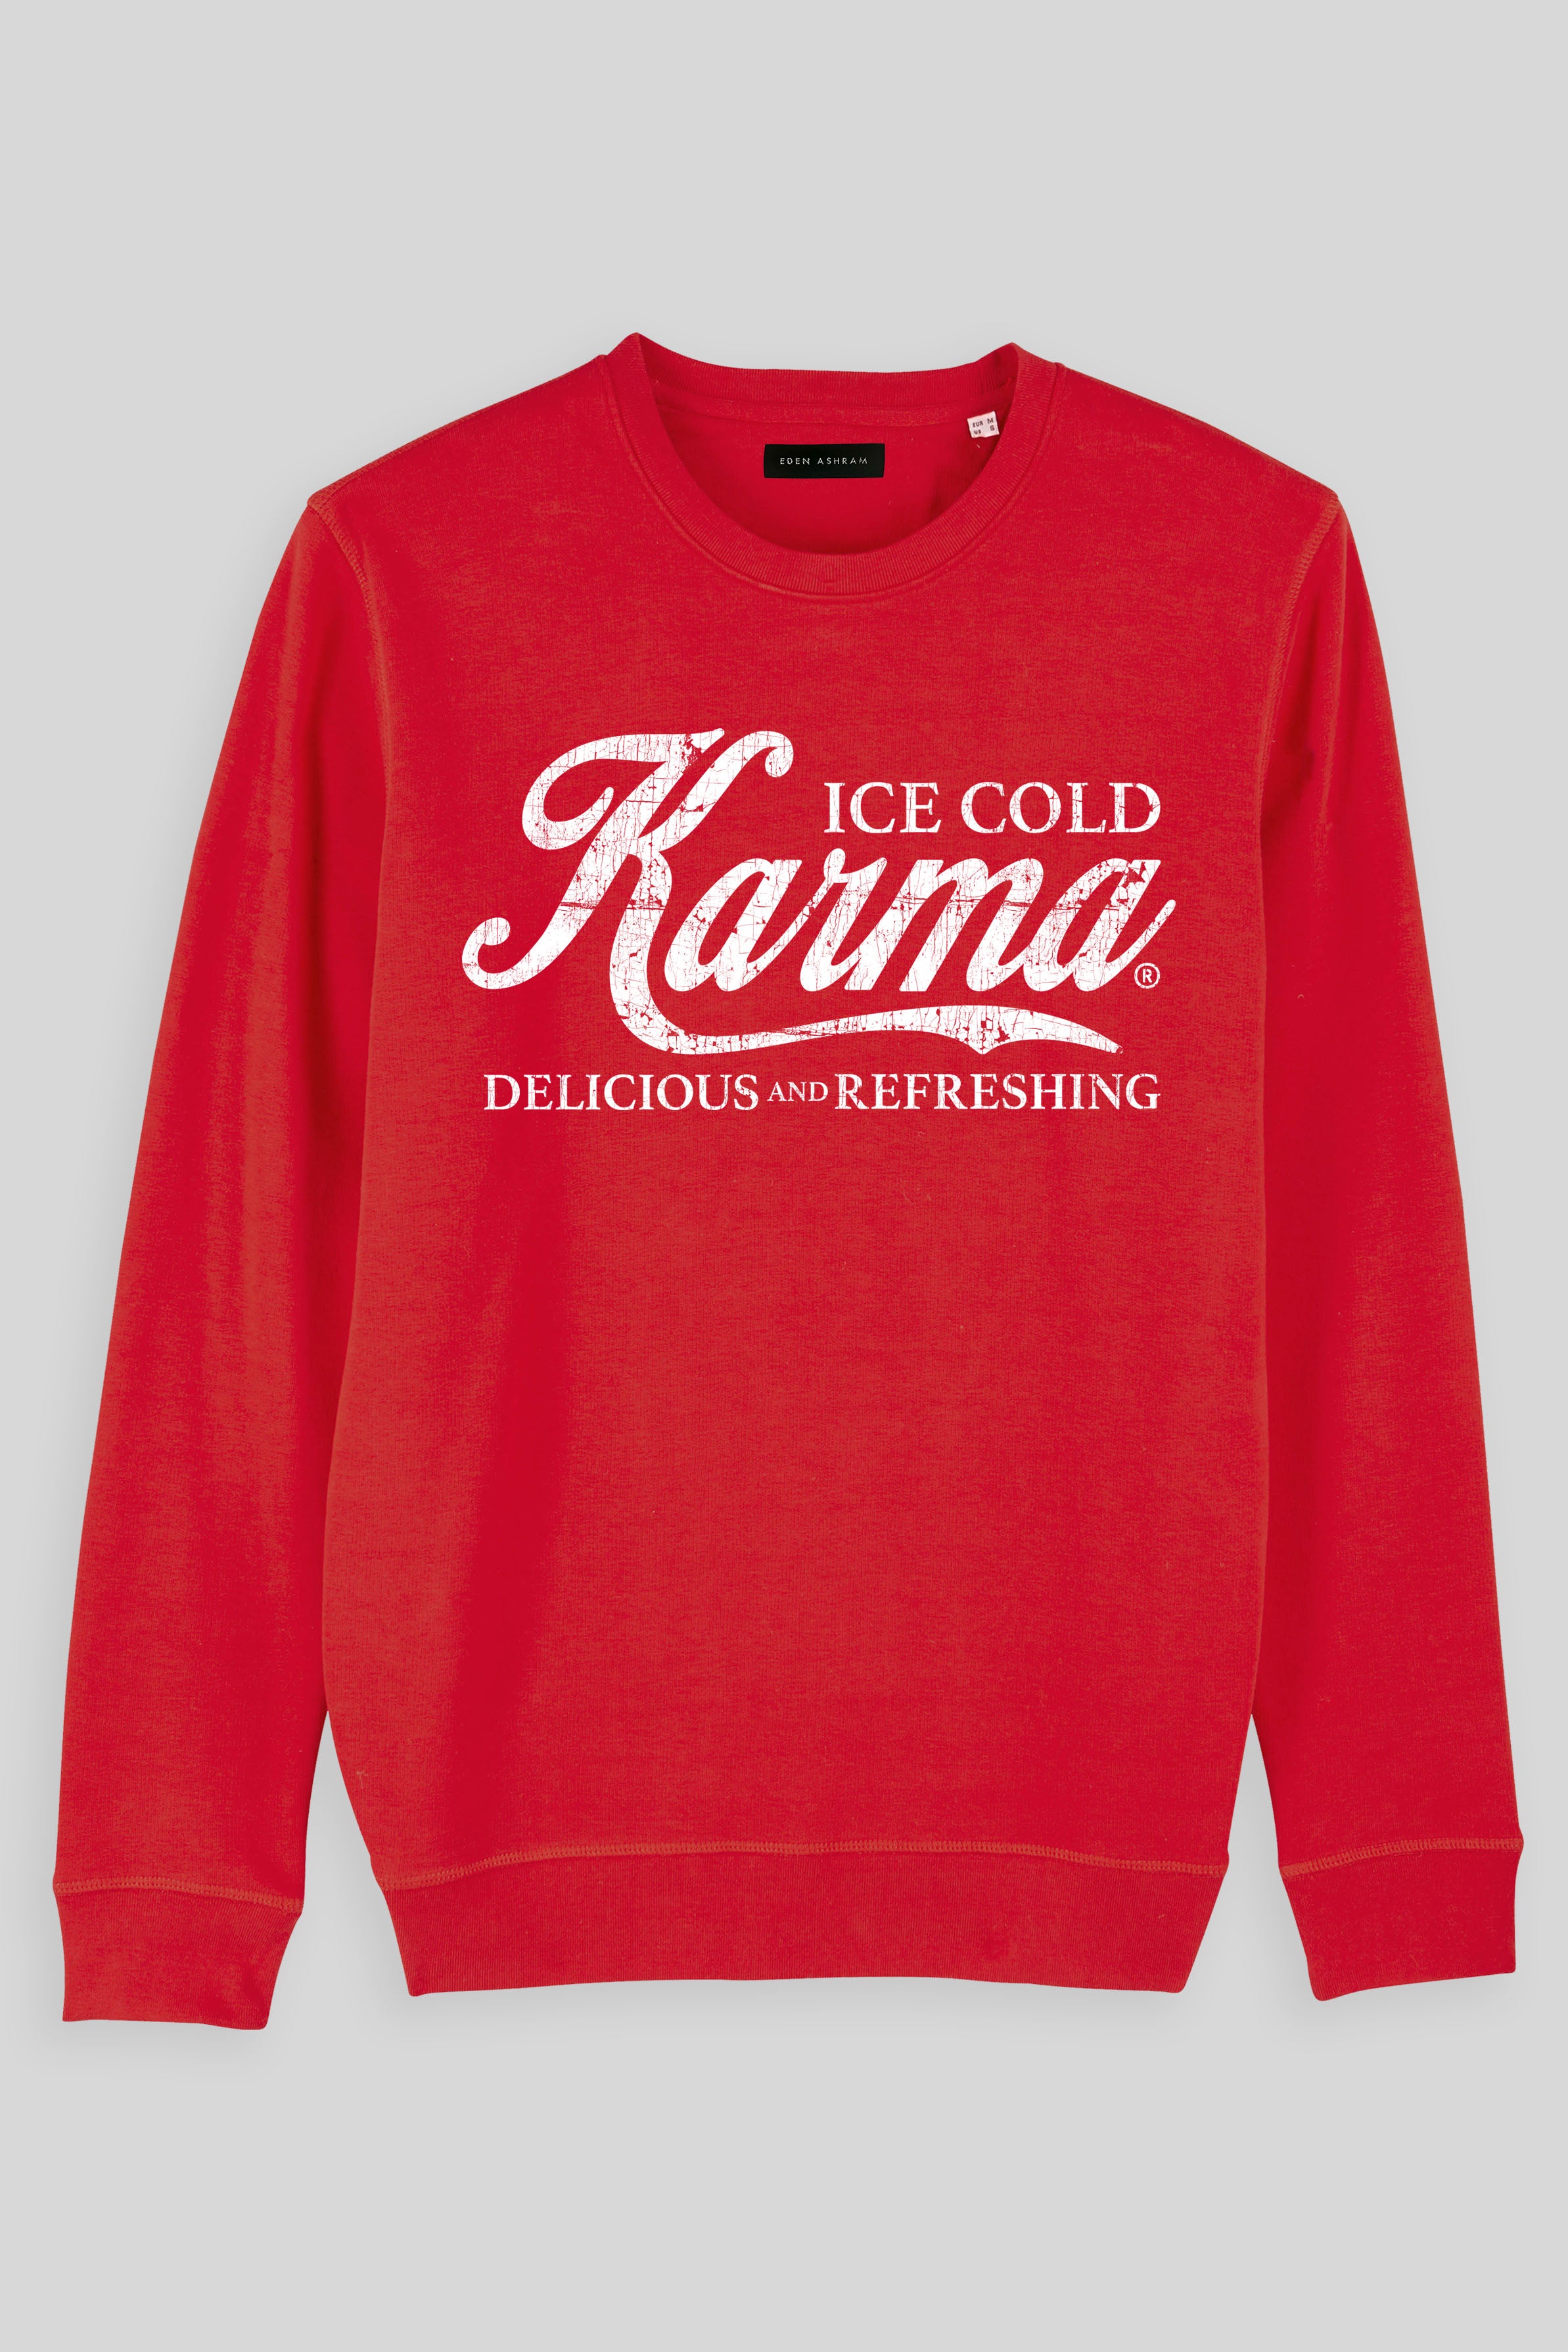 Eden Ashram Ice Cold Karma Premium Crew Neck Sweatshirt Red